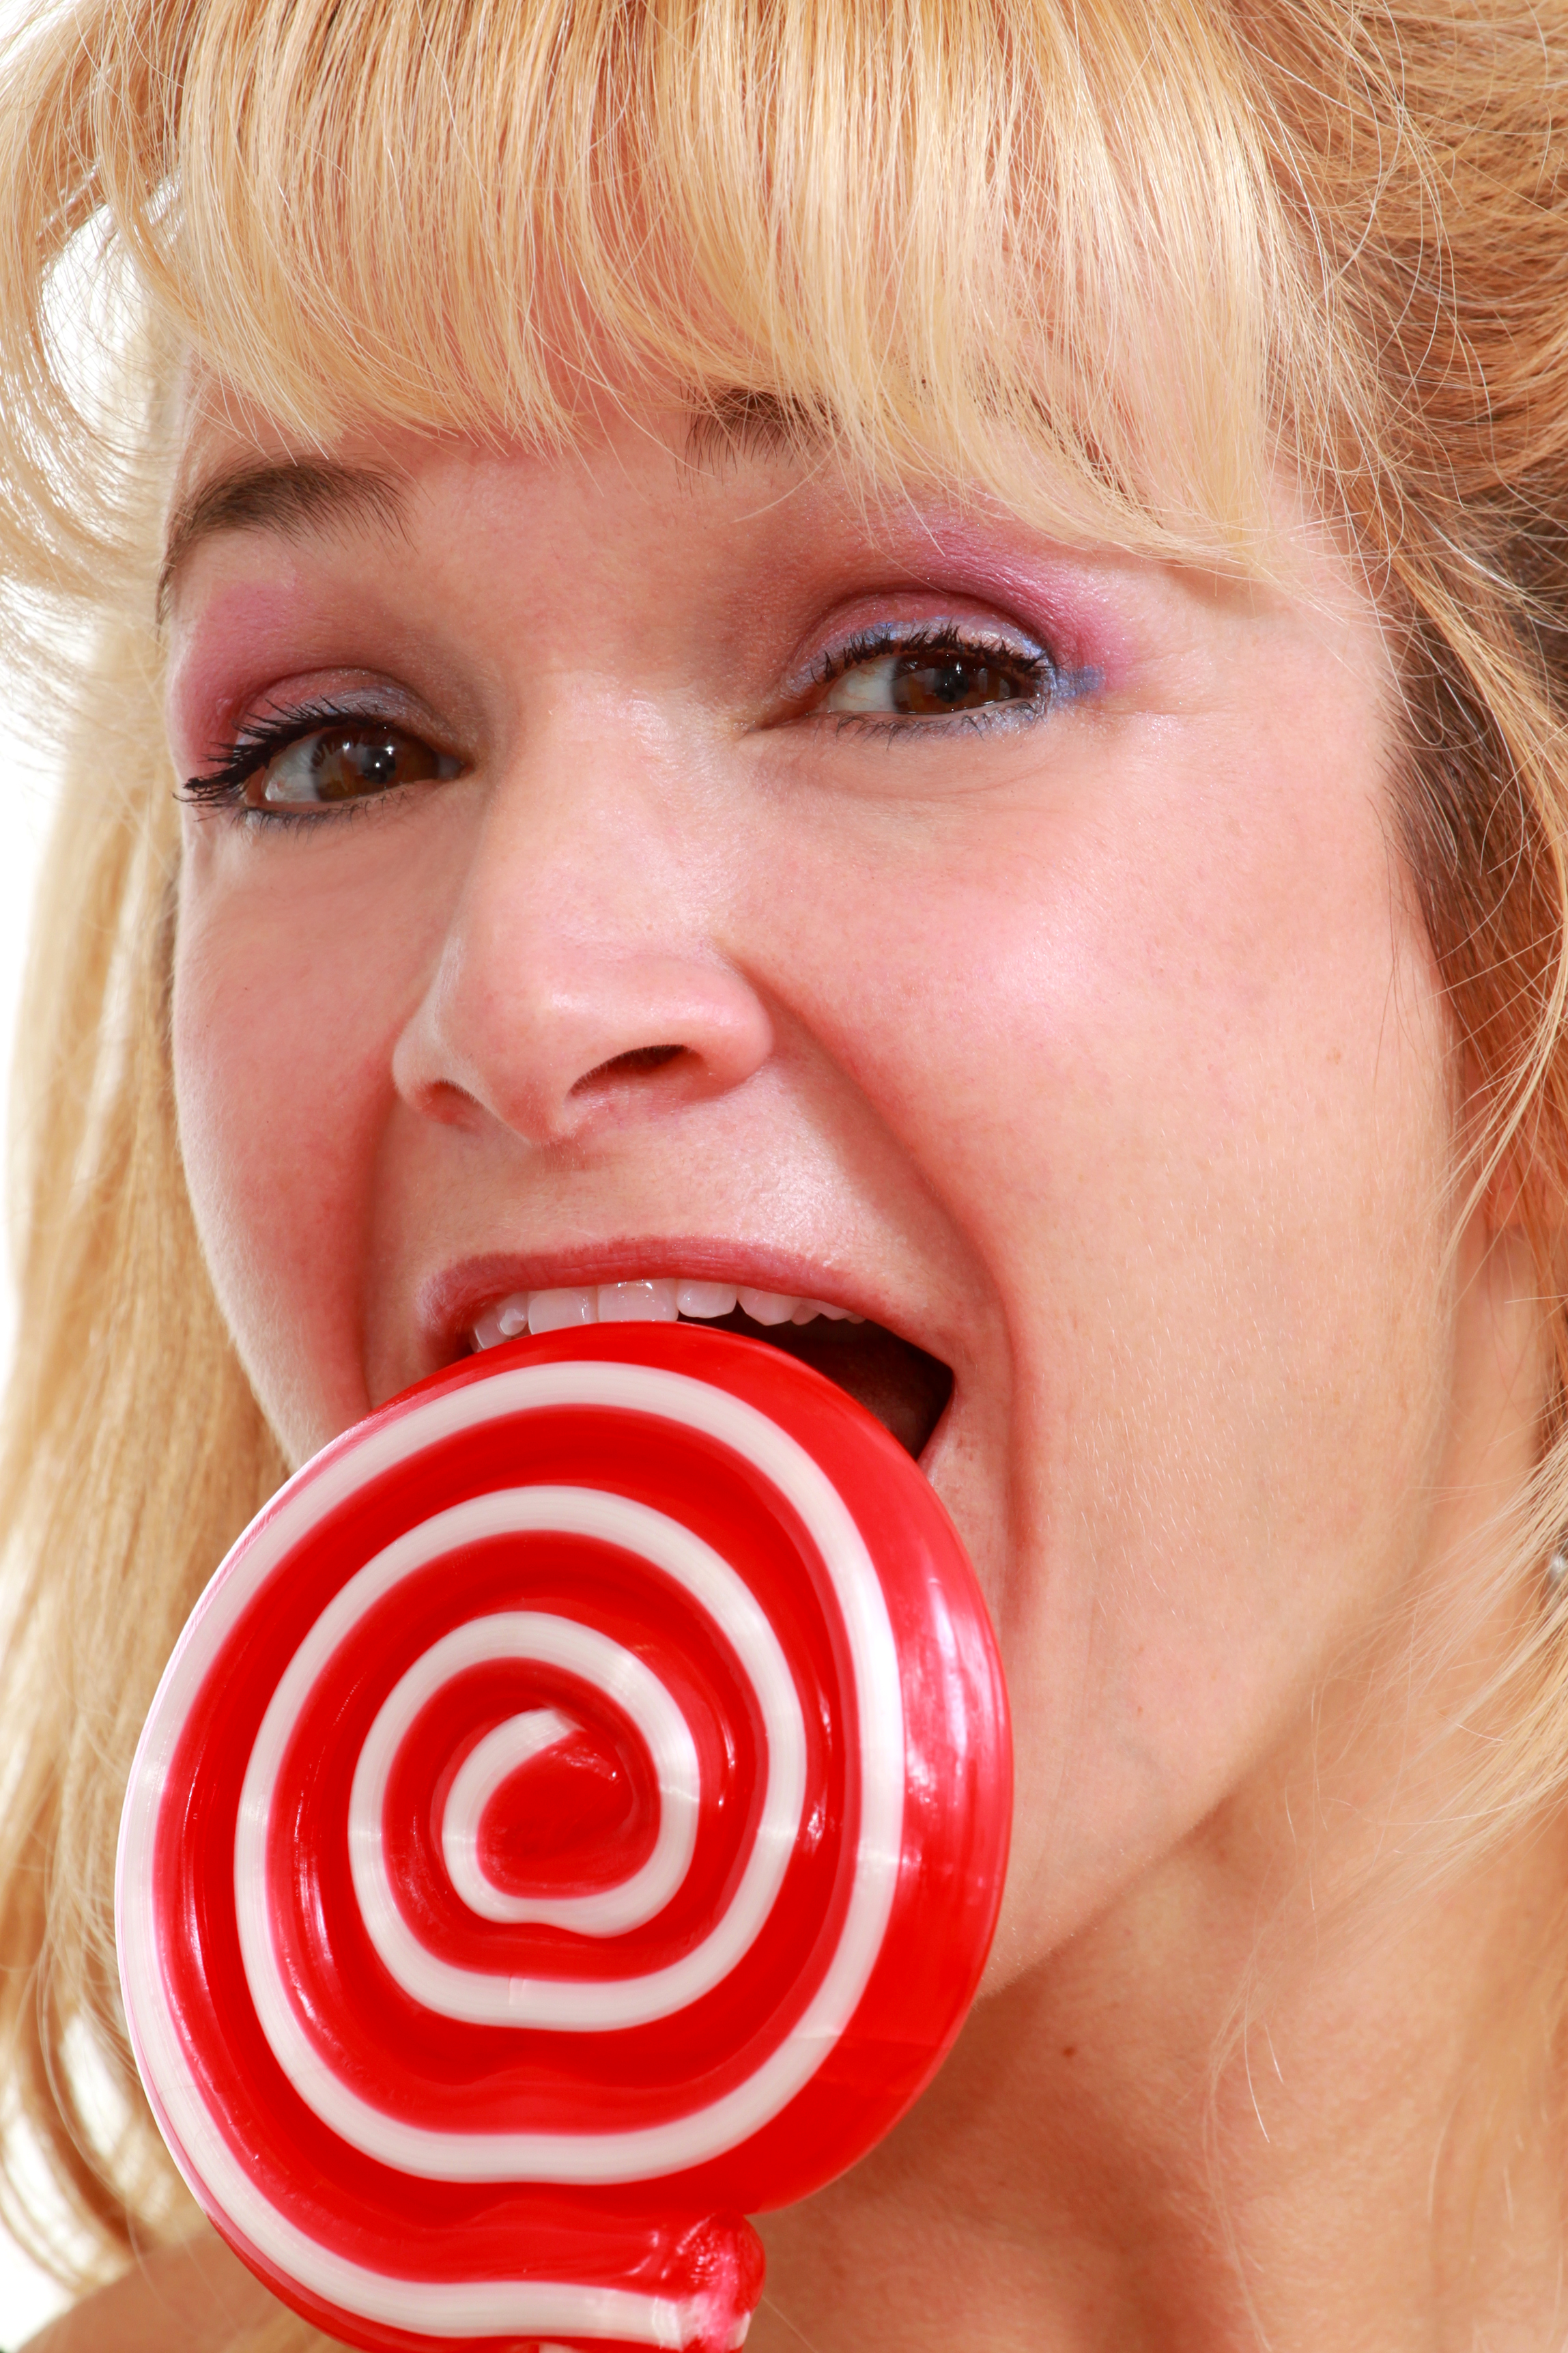 Woman enjoying a lollipop photo